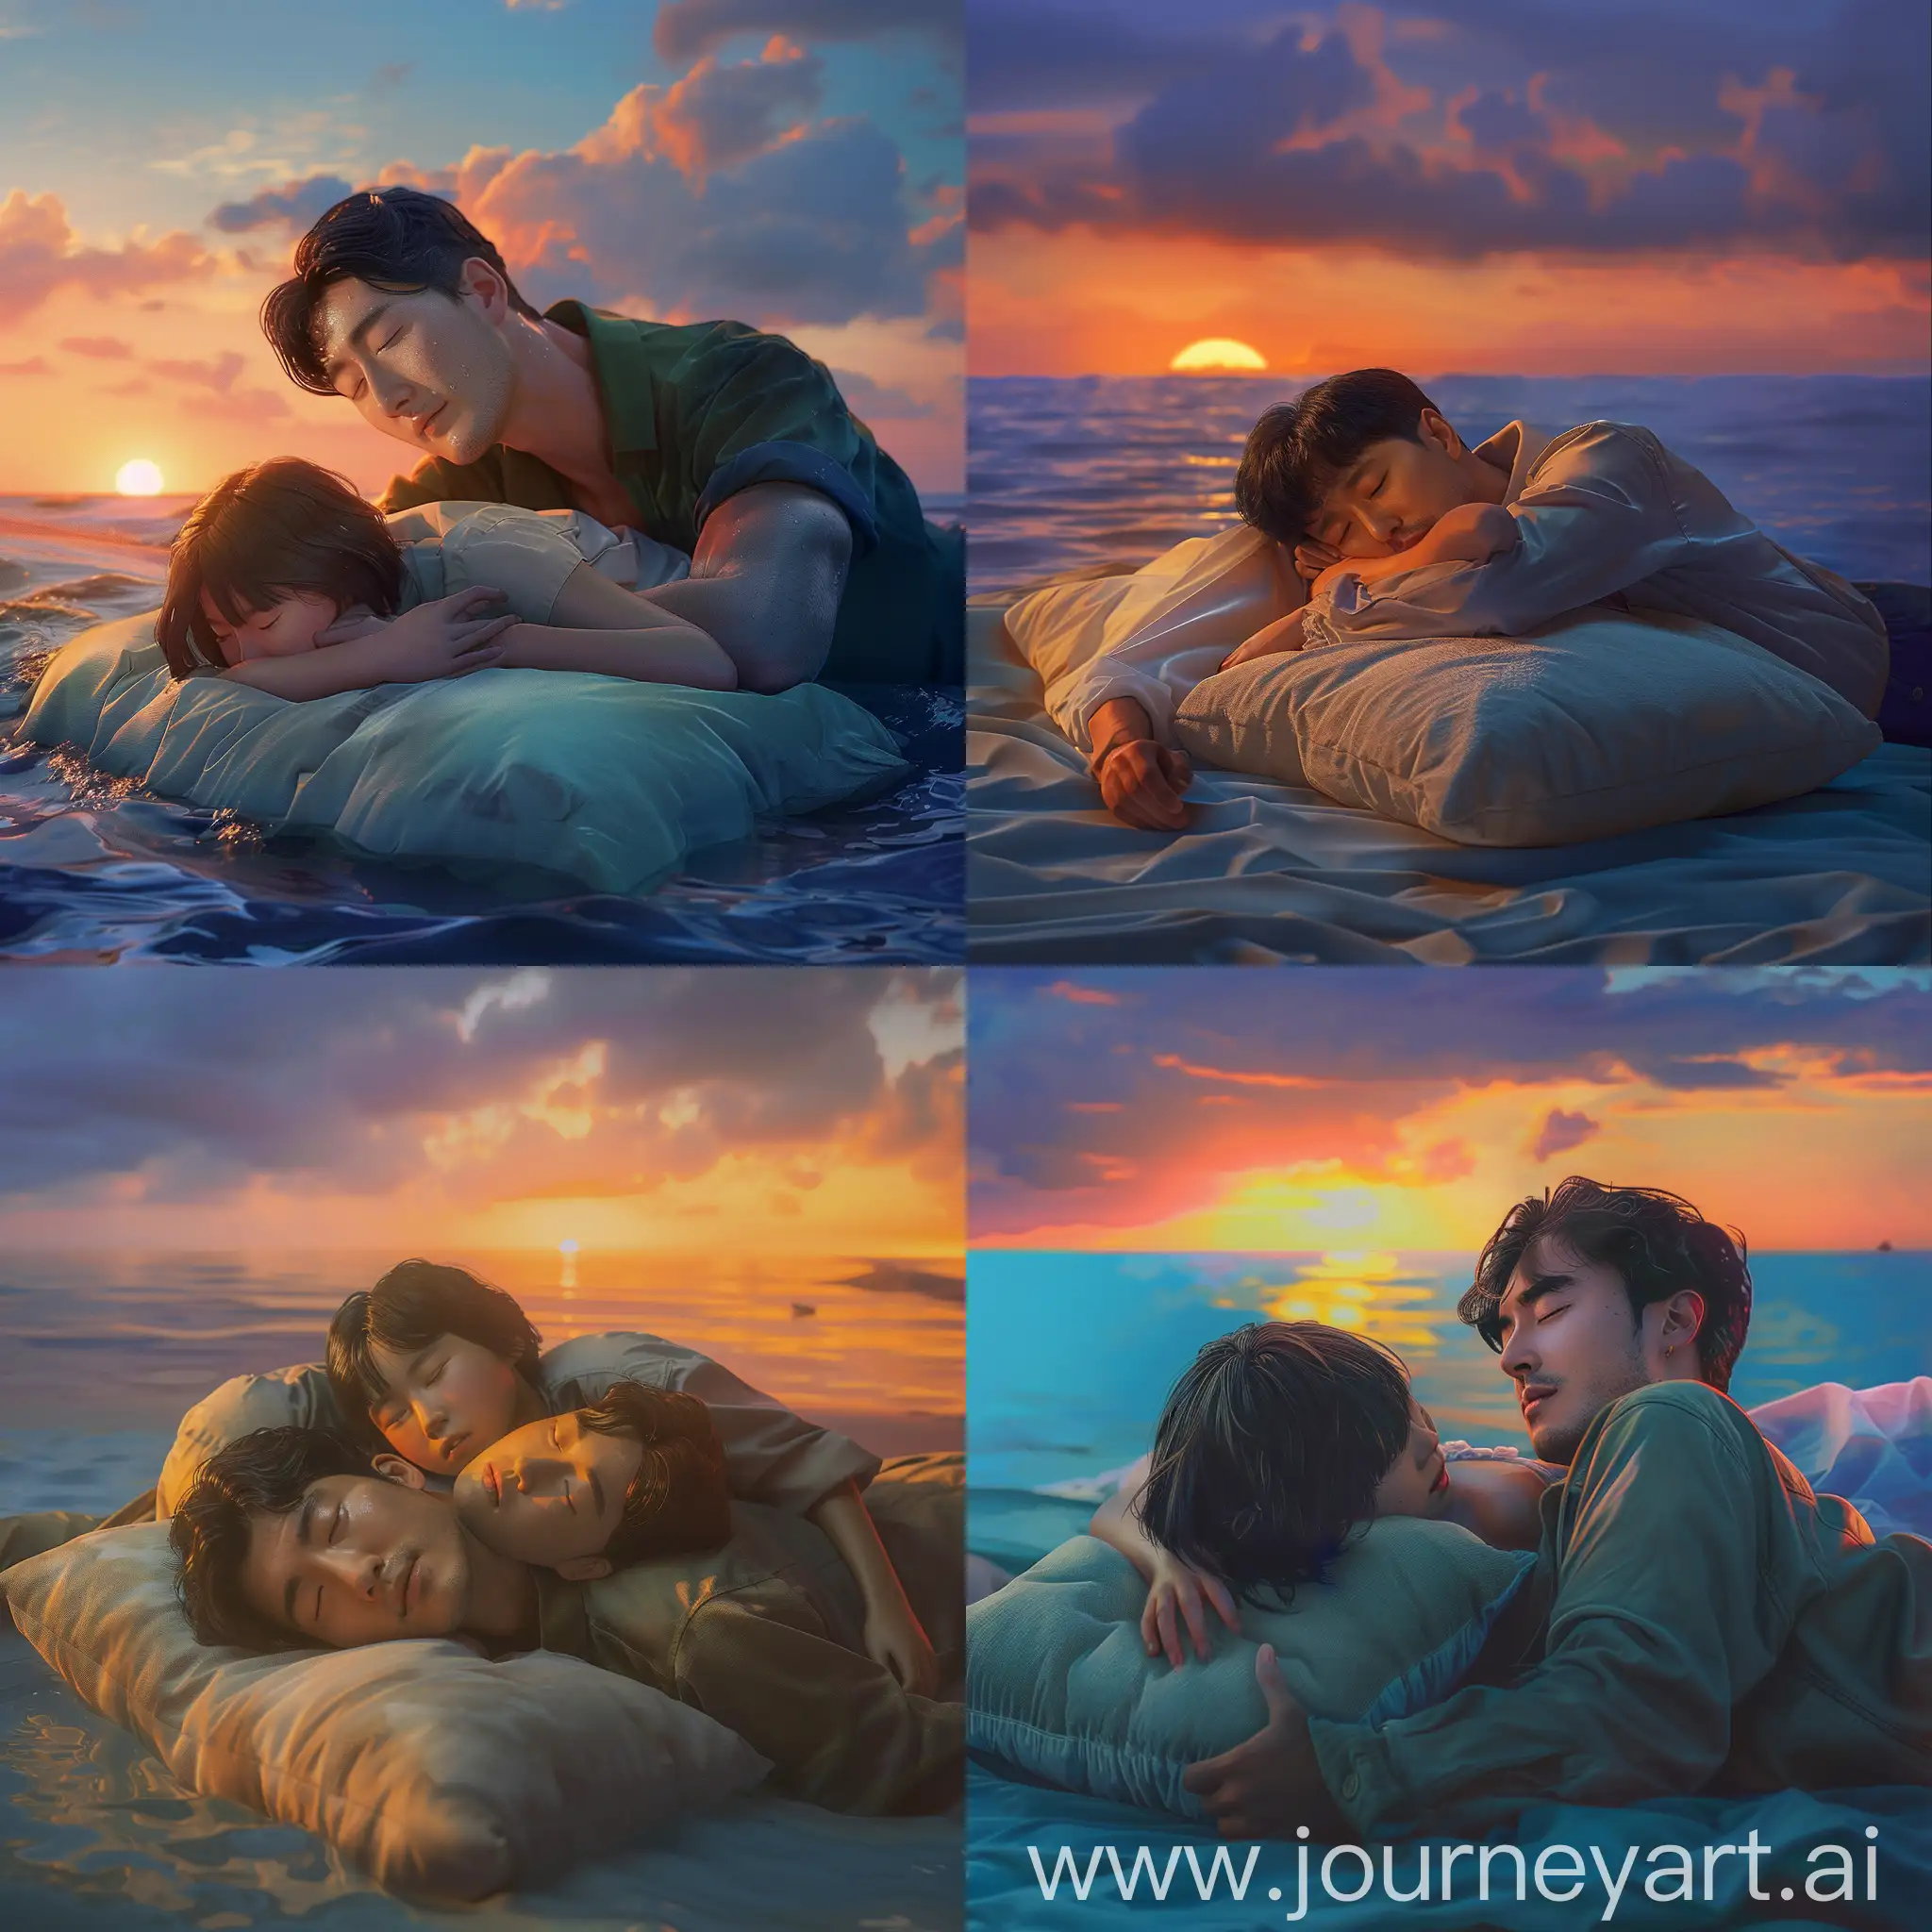 Romantic-Sunset-Beach-Scene-Korean-Man-Embracing-Girl-on-Soft-Pillow